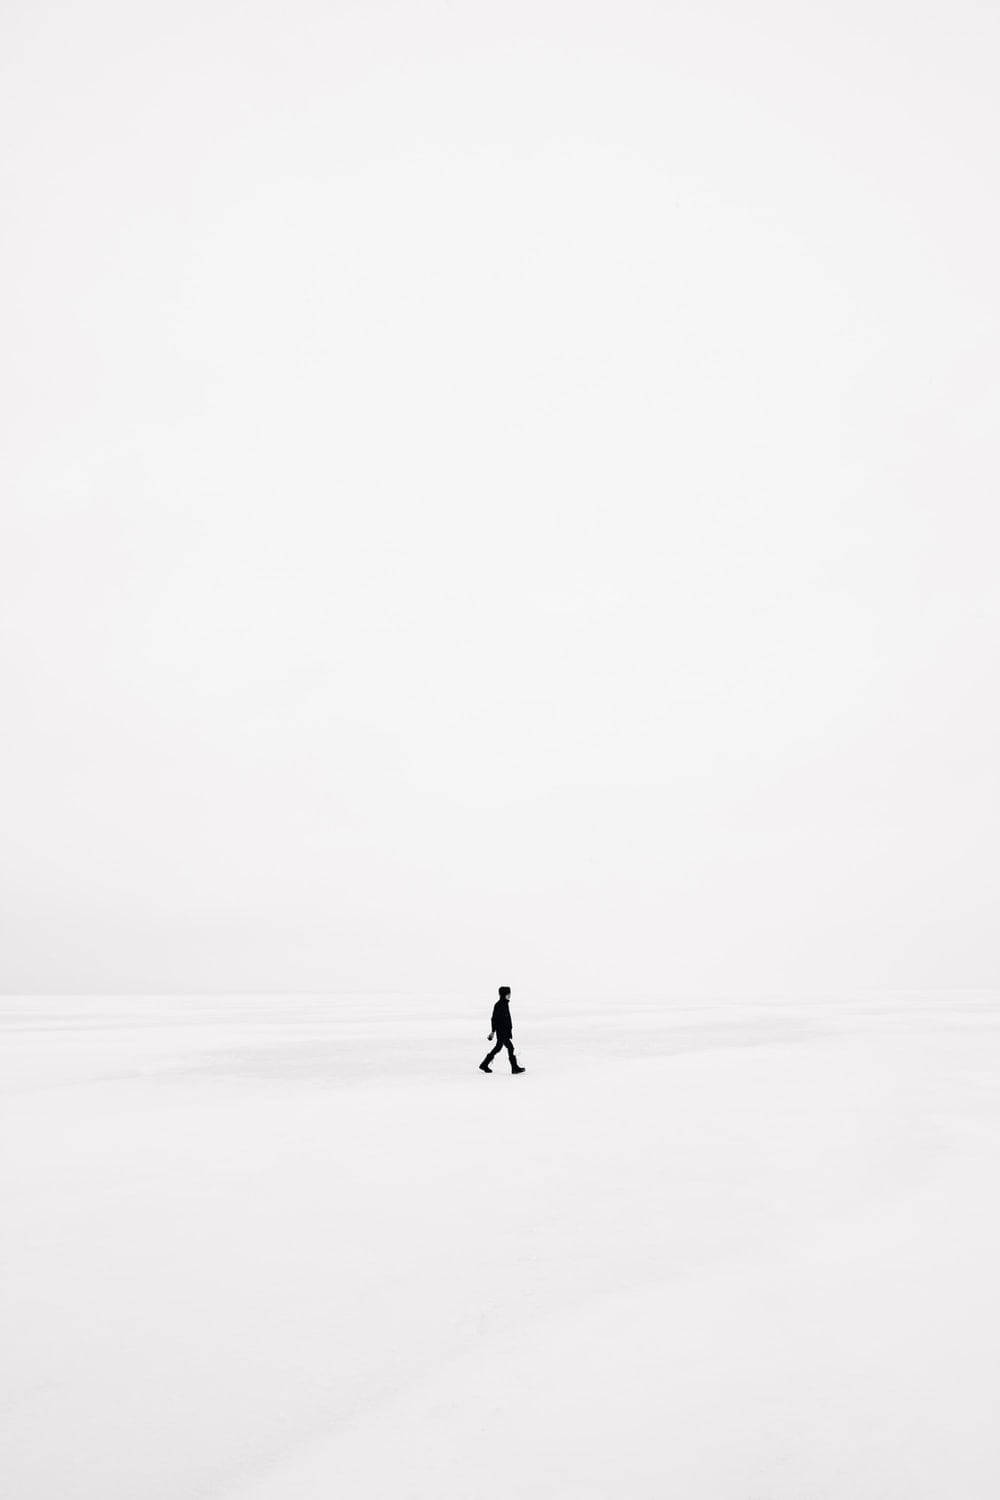 Walking Across Cool White